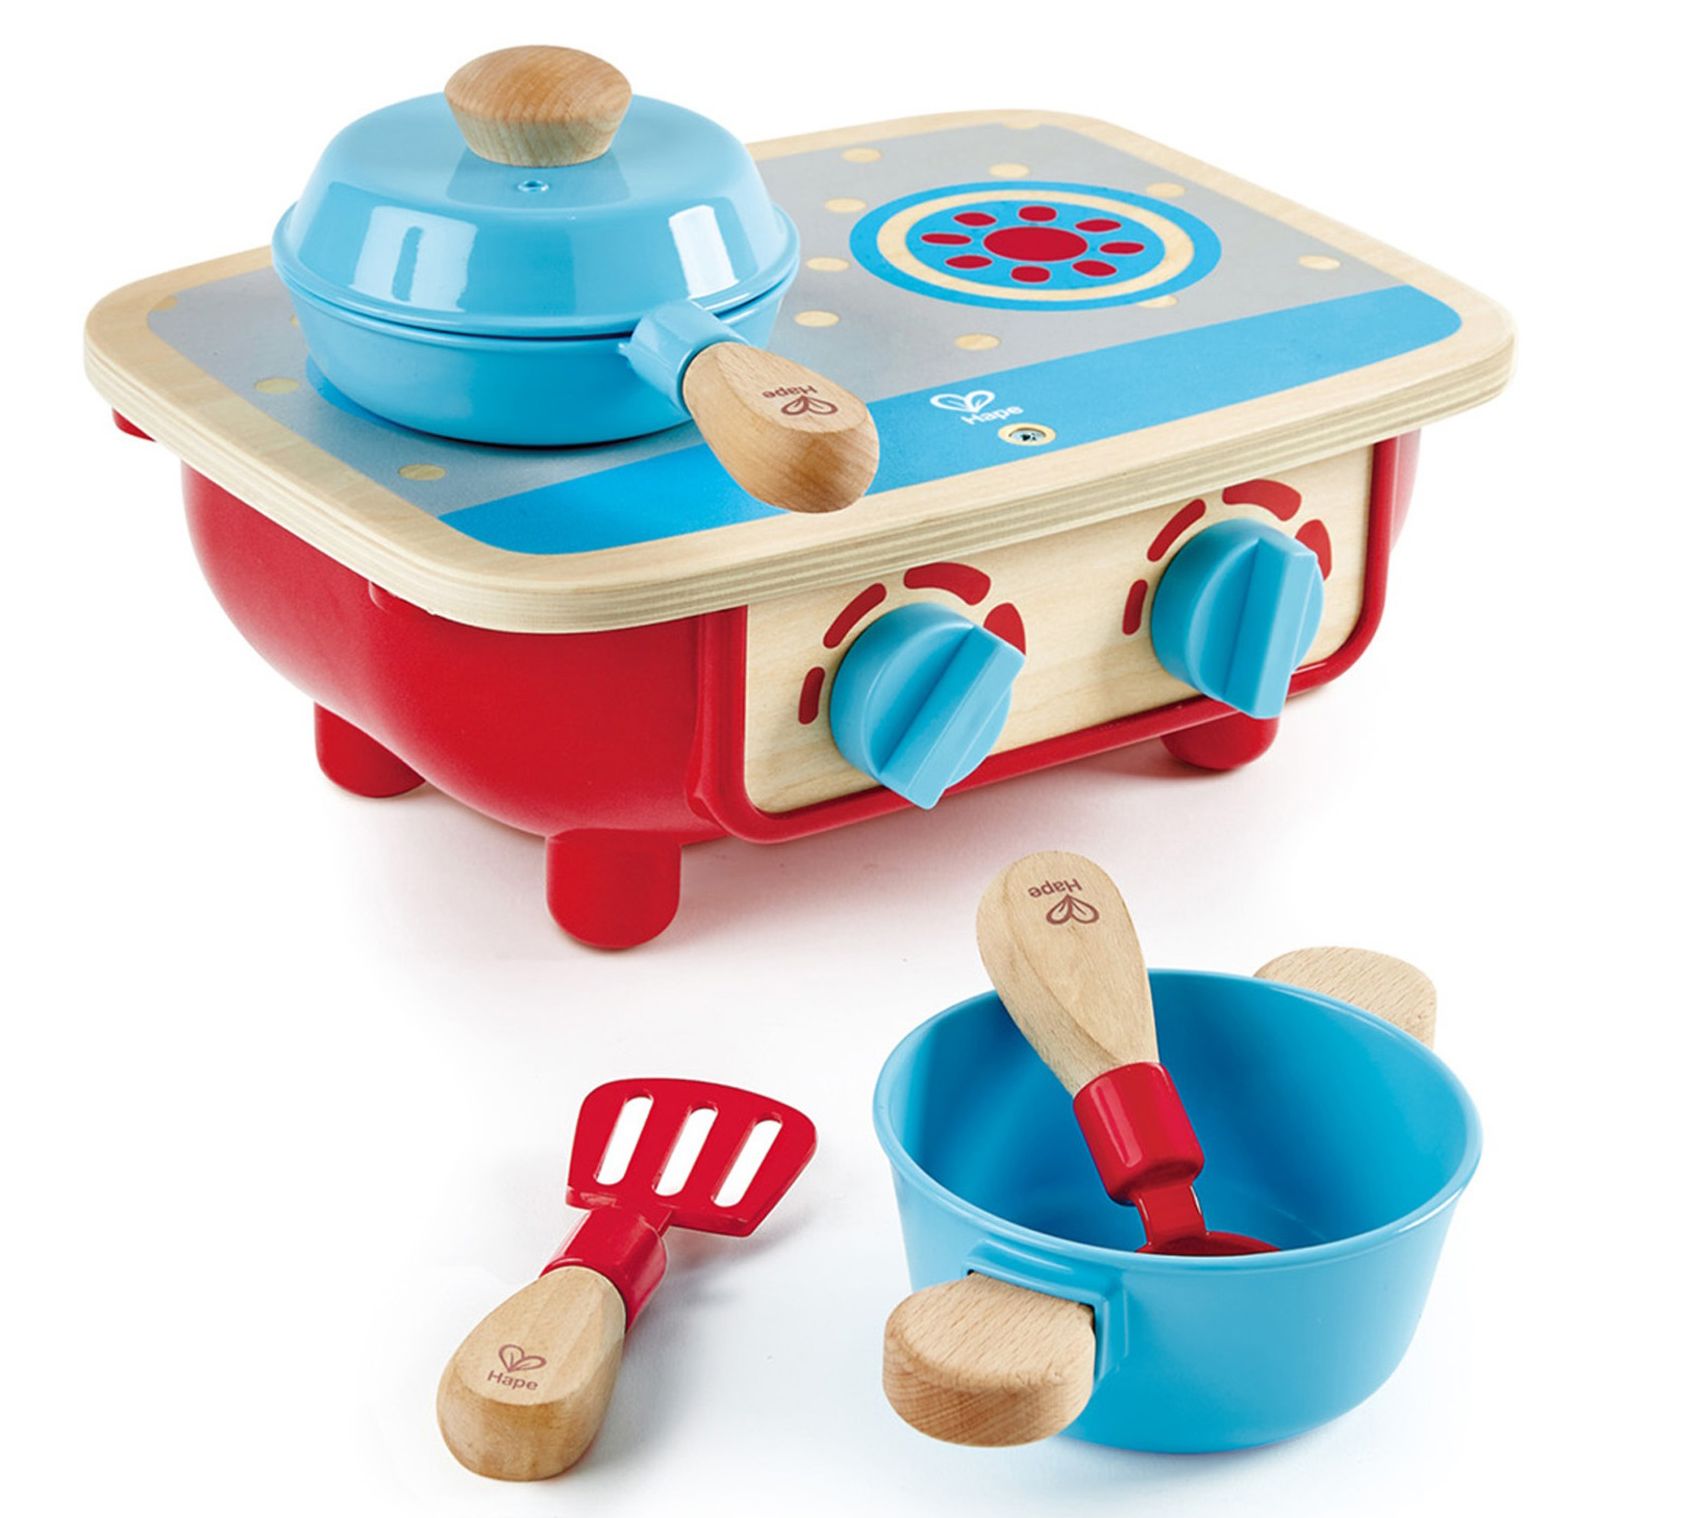  iPlay, iLearn Play Kitchen Accessories, Toddler